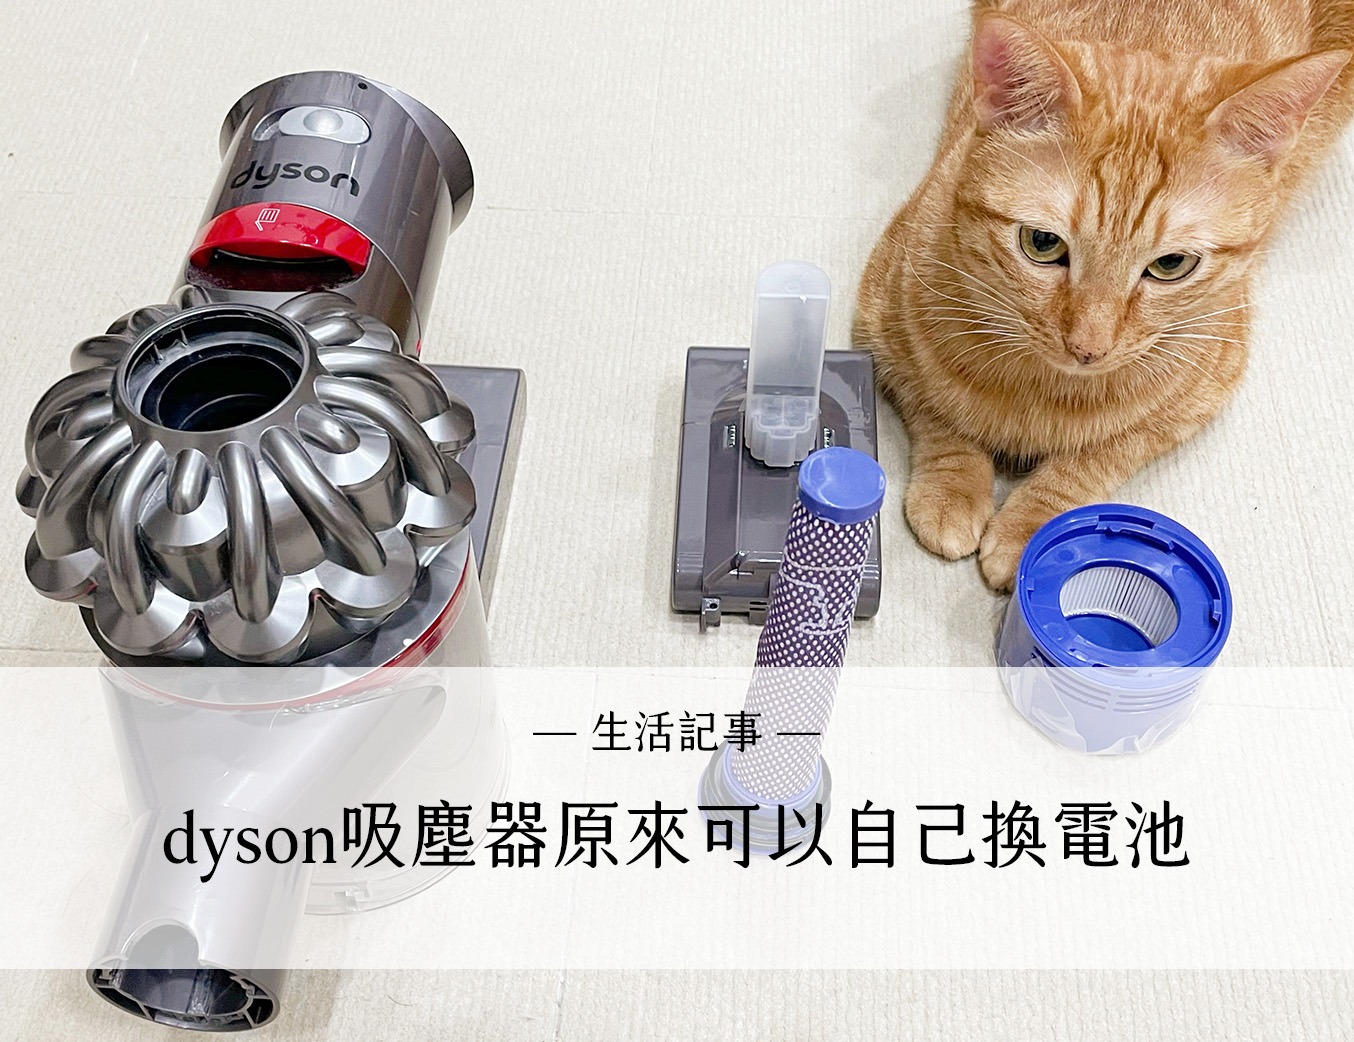 Dyson吸塵器換電池——自己動手換